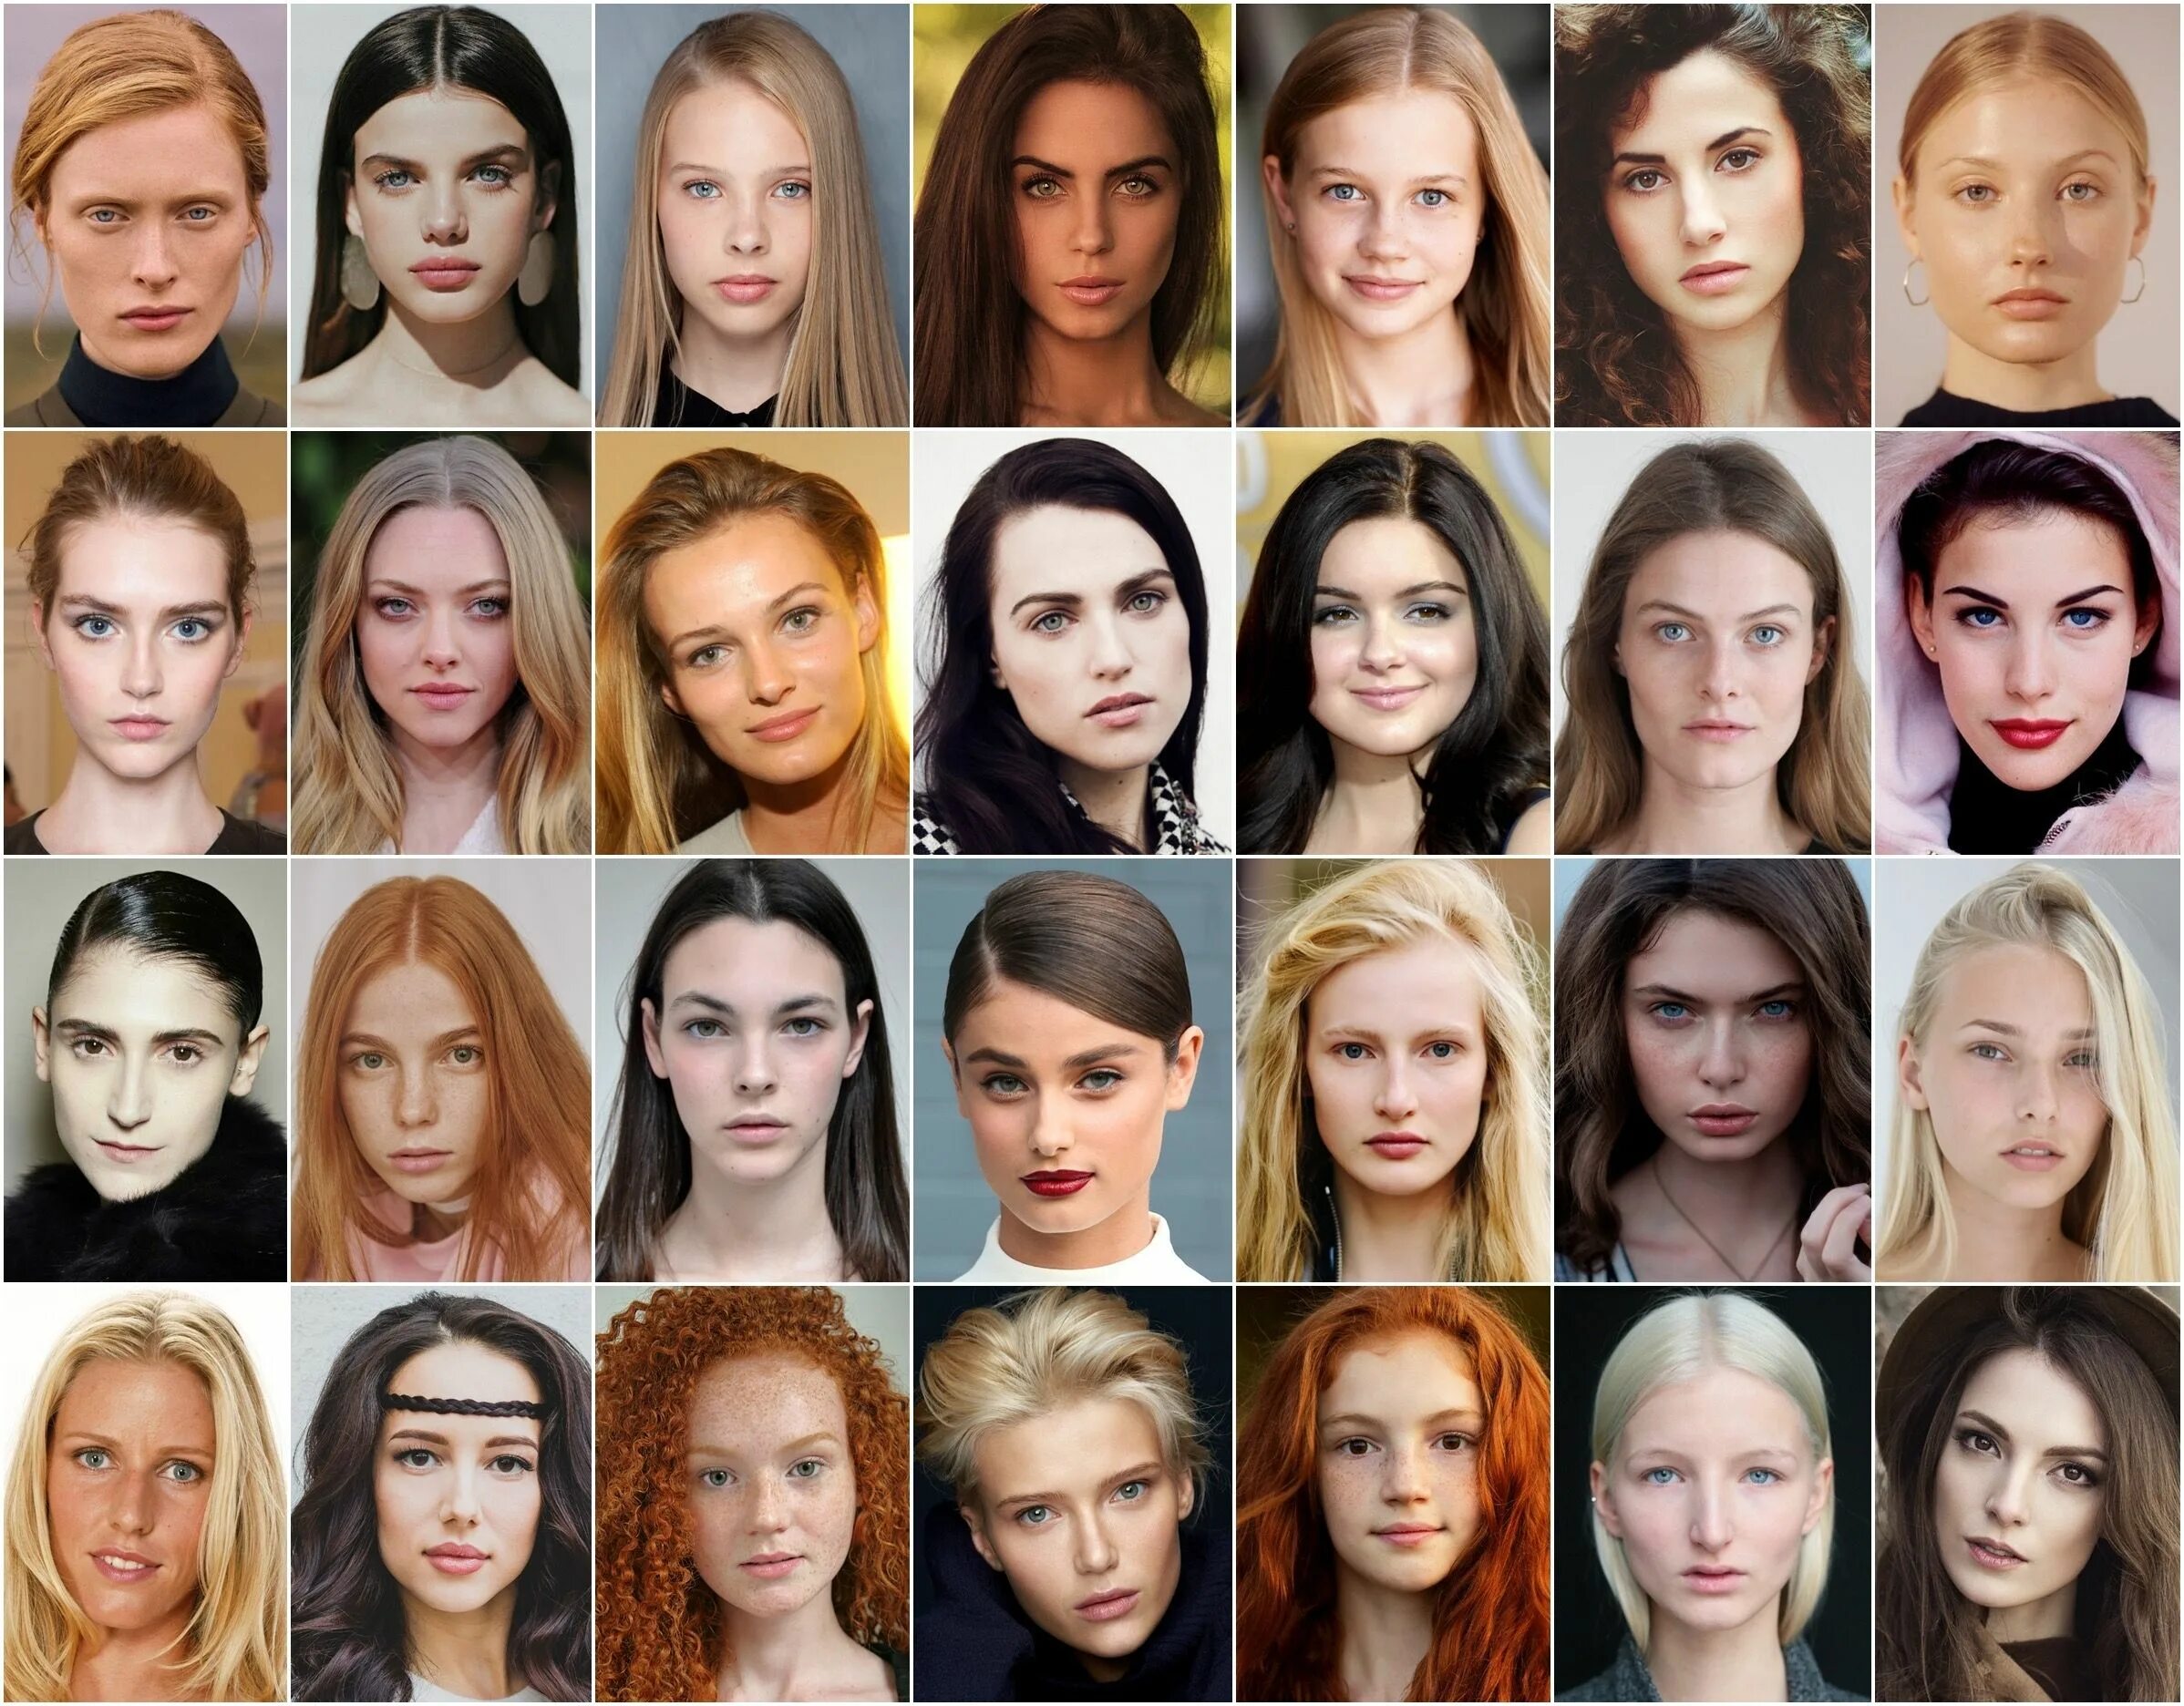 Европейский Тип внешности. Типажи девушек по внешности. Этнический Тип внешности. Европейский типаж внешности.